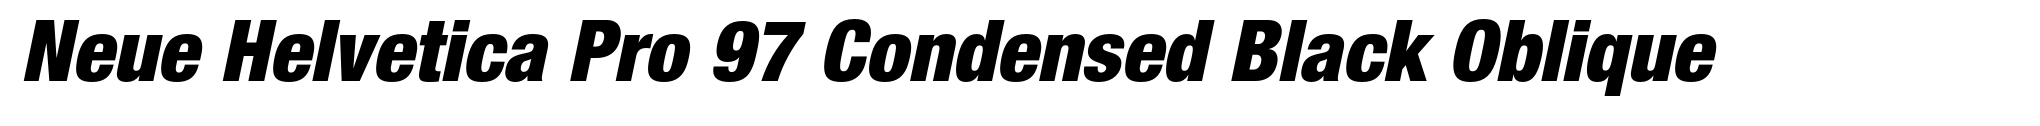 Neue Helvetica Pro 97 Condensed Black Oblique image